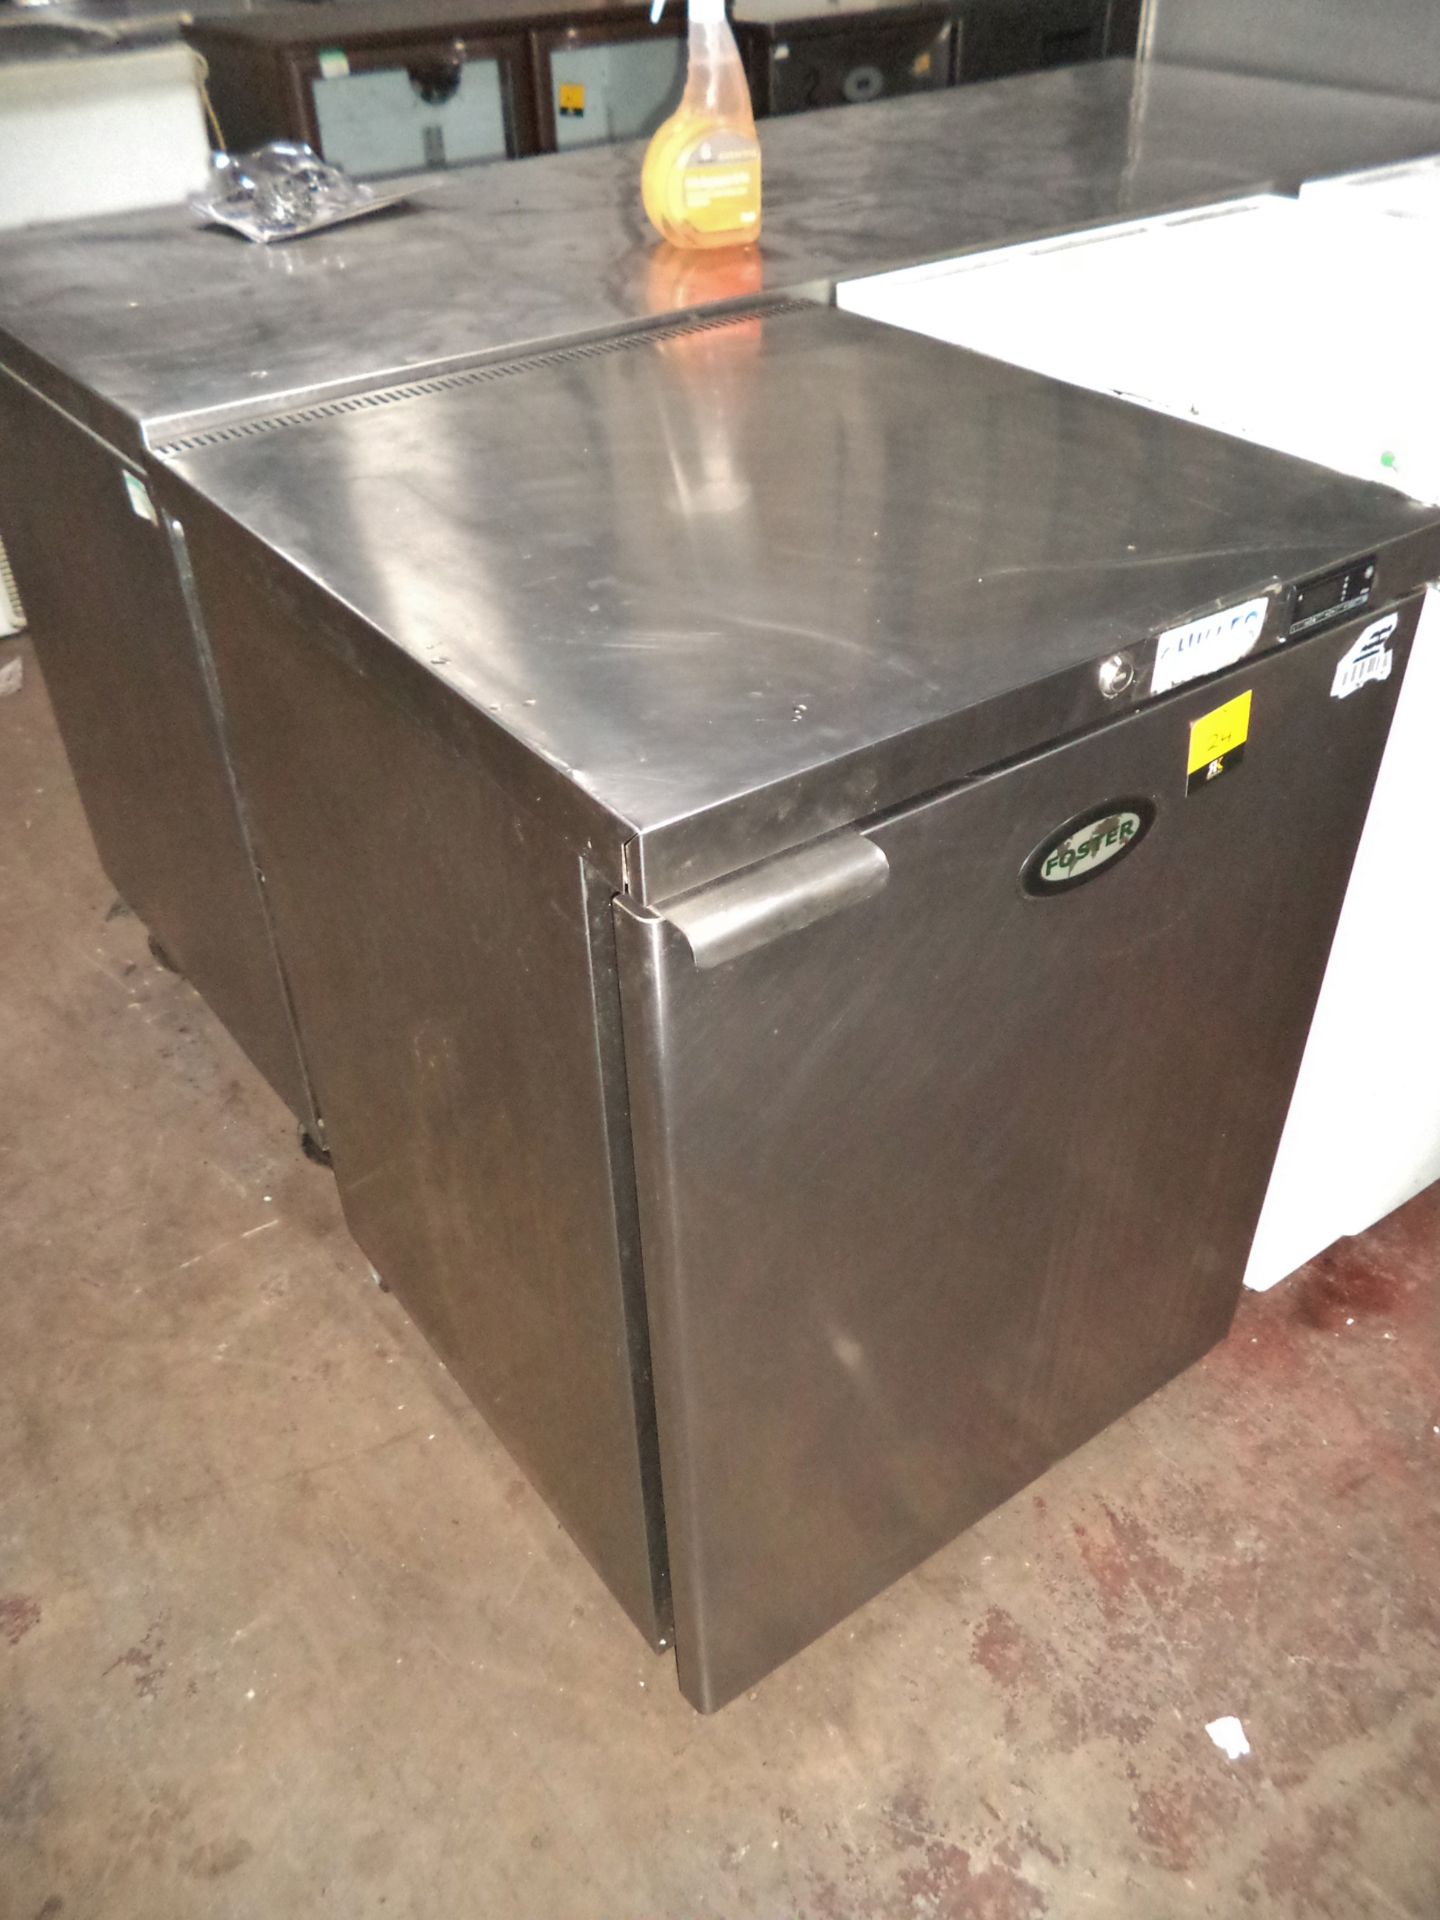 Foster stainless steel counter height fridge, model LR150 IMPORTANT: Please remember goods